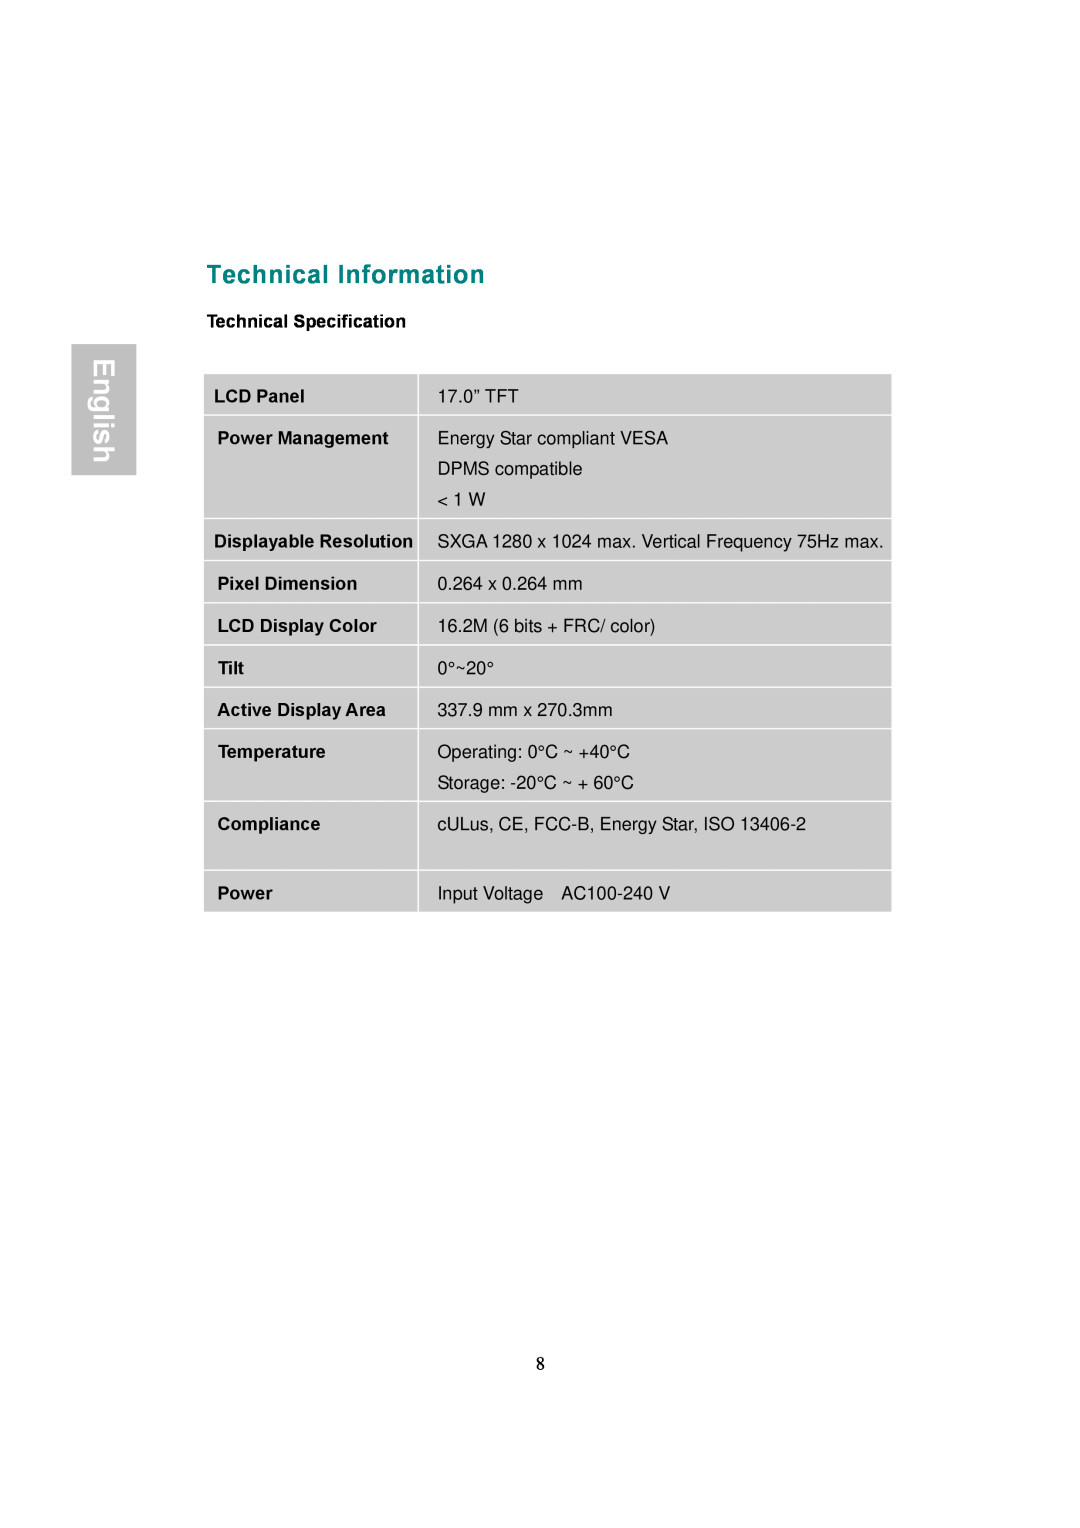 AOC 177S manual Technical Information, English 